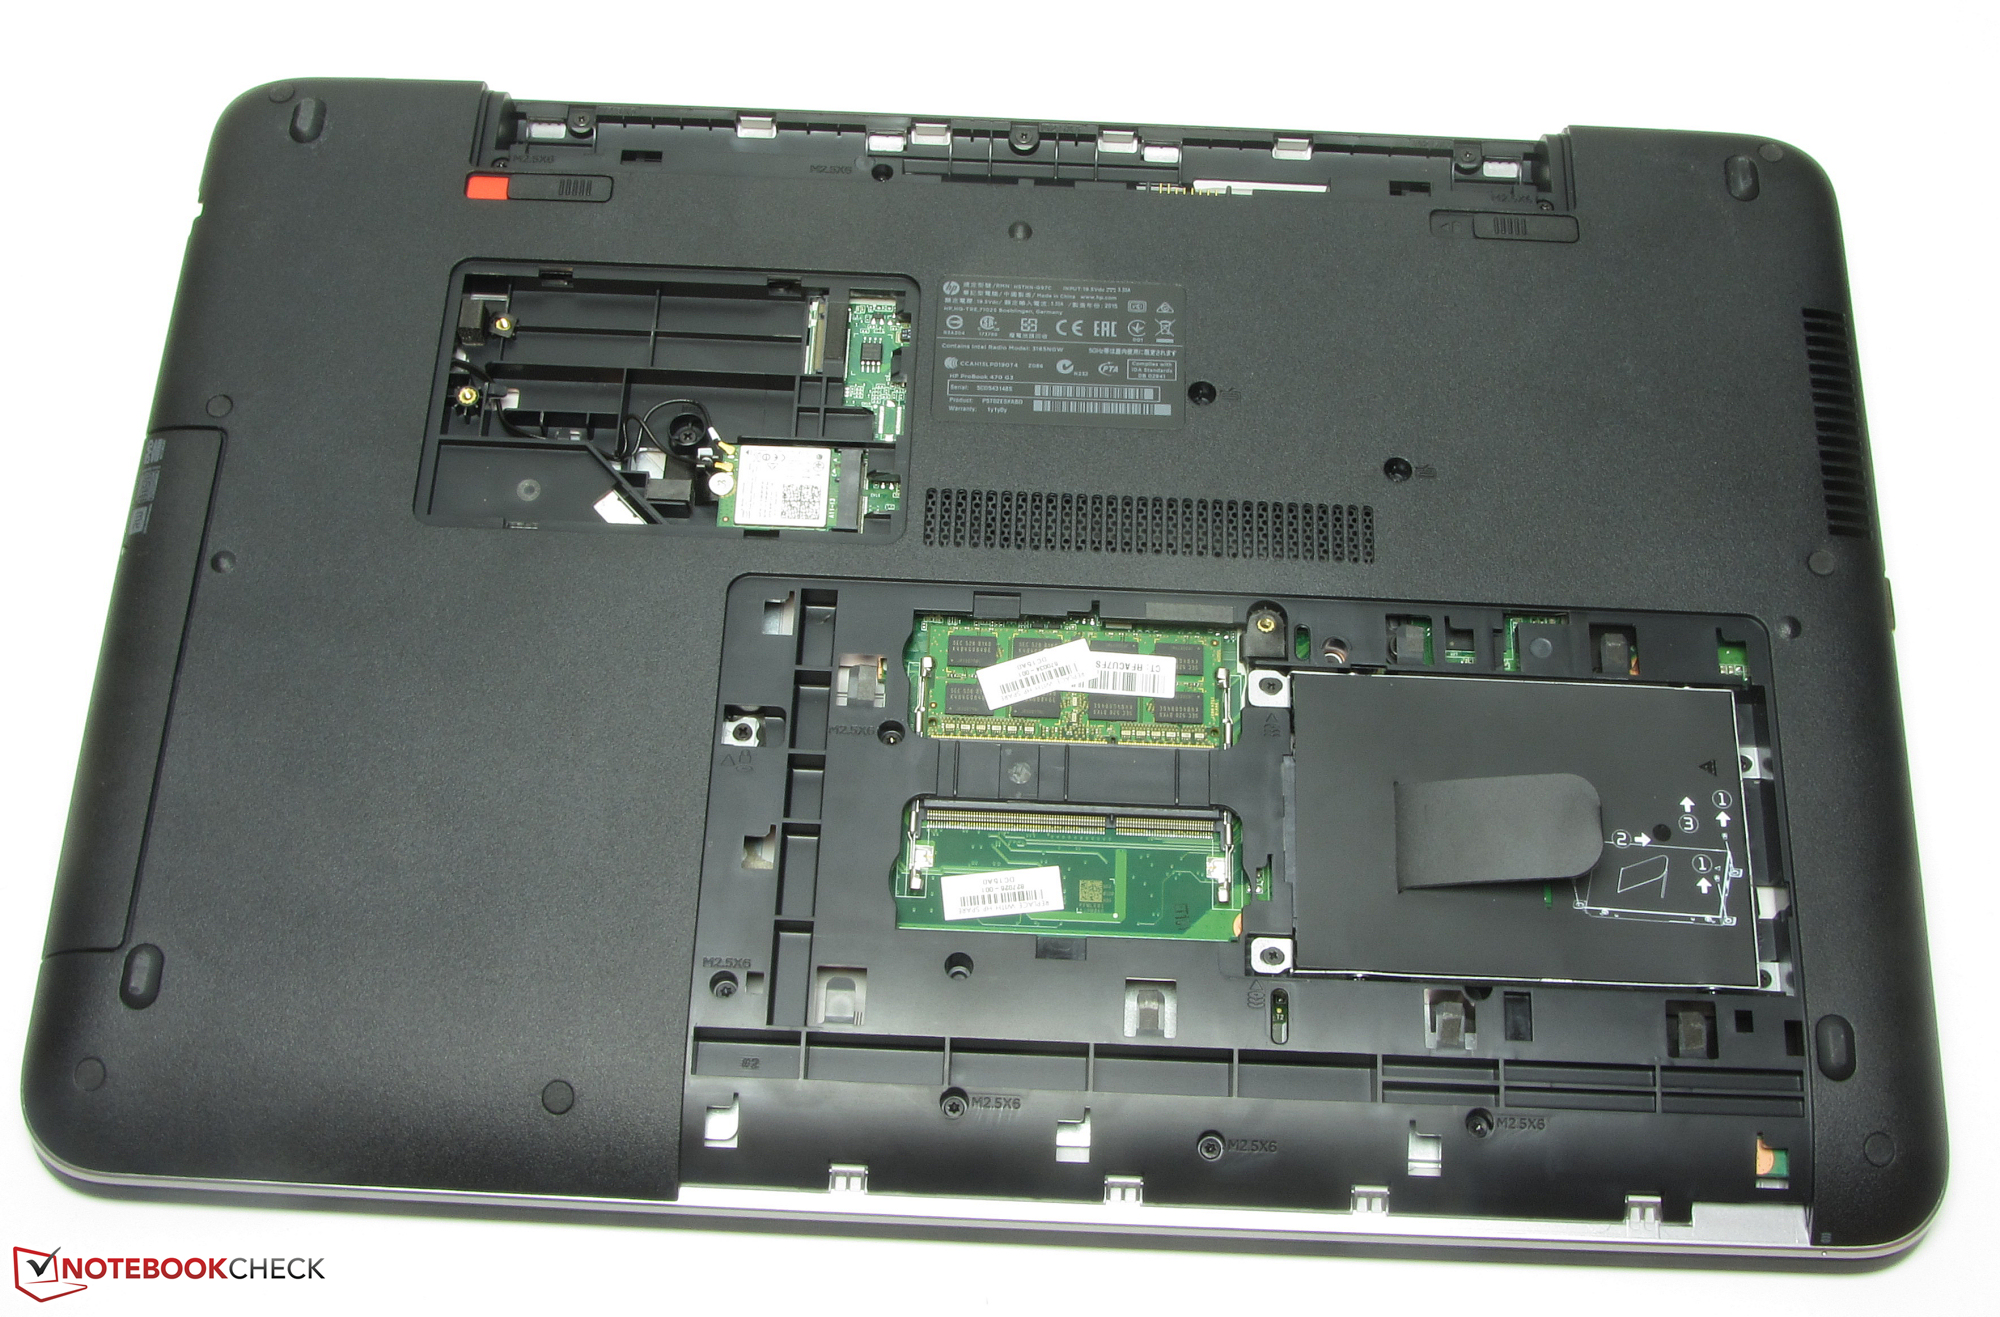 HP ProBook 470 G3 (Core i7-6500U, Radeon R7 M340) Notebook Review 